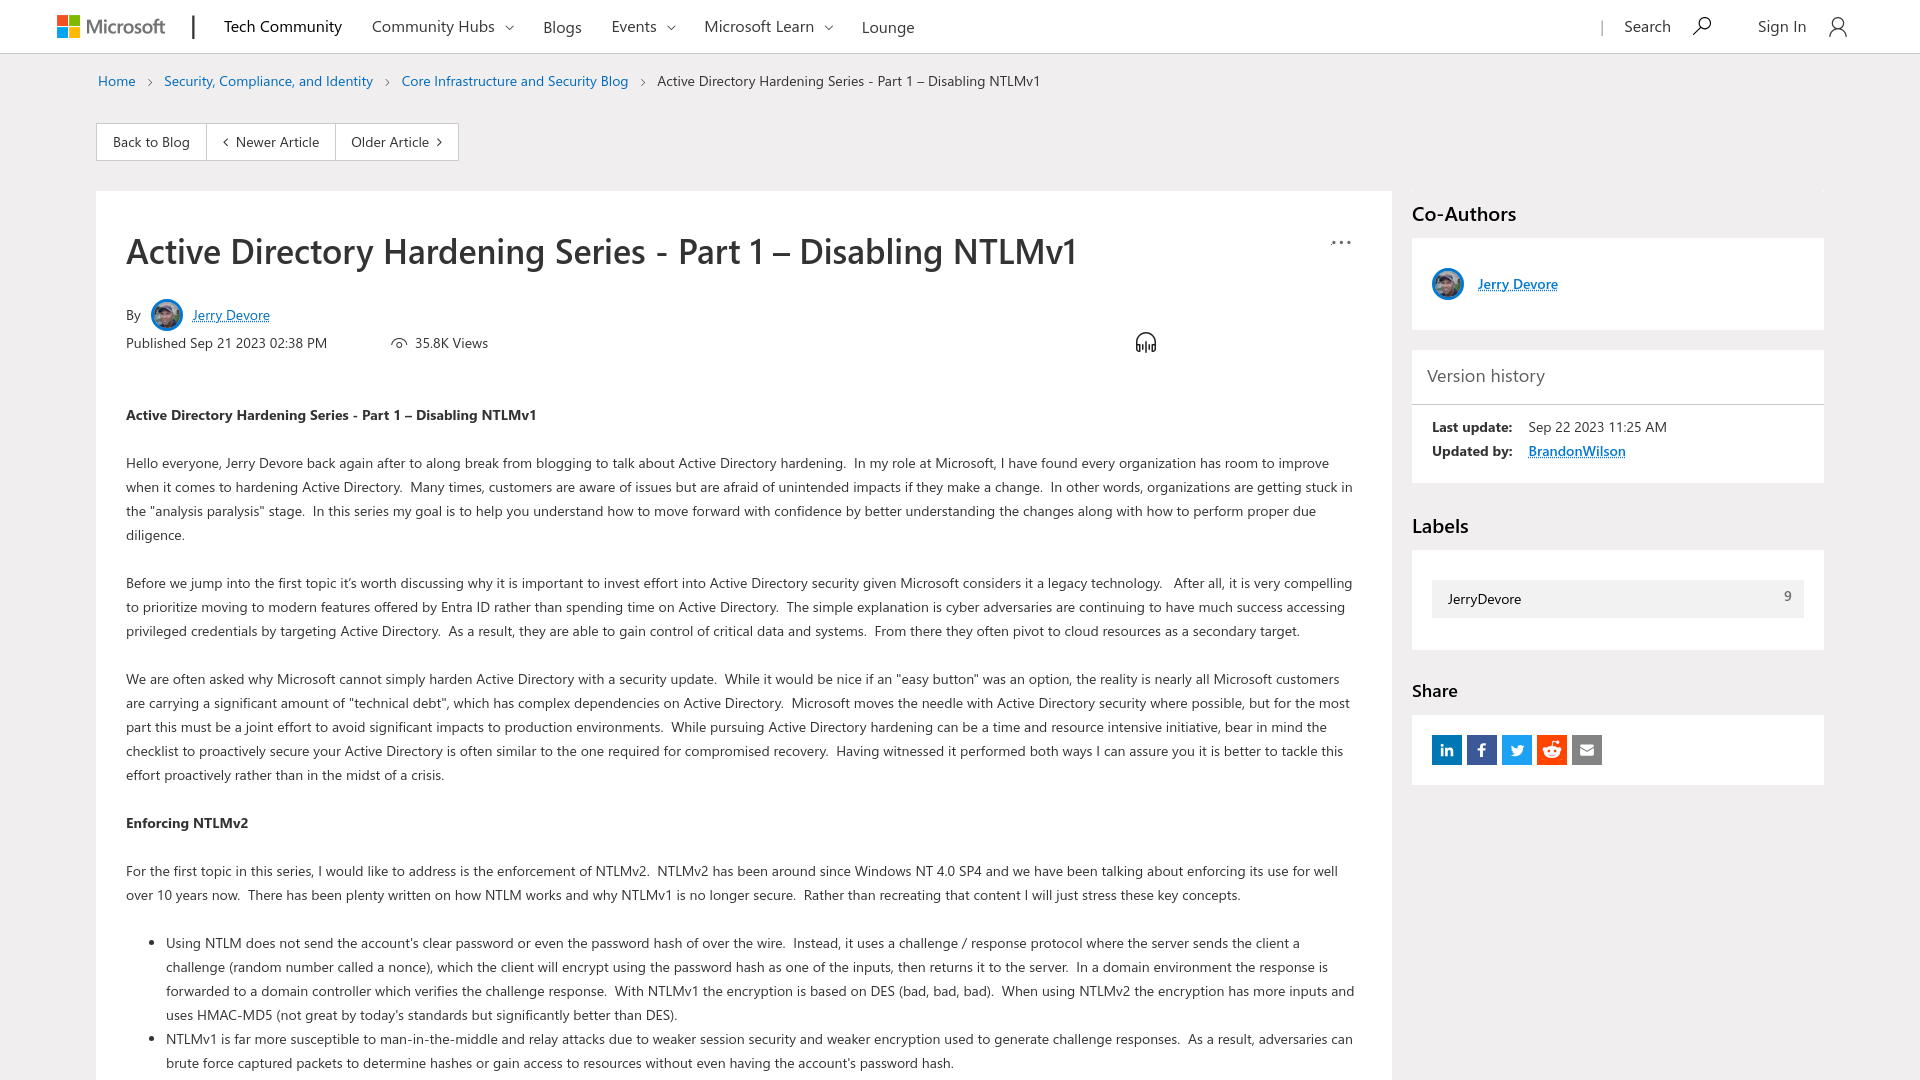 Active Directory Hardening Series - Part 1 – Disabling NTLMv1 - Microsoft Community Hub